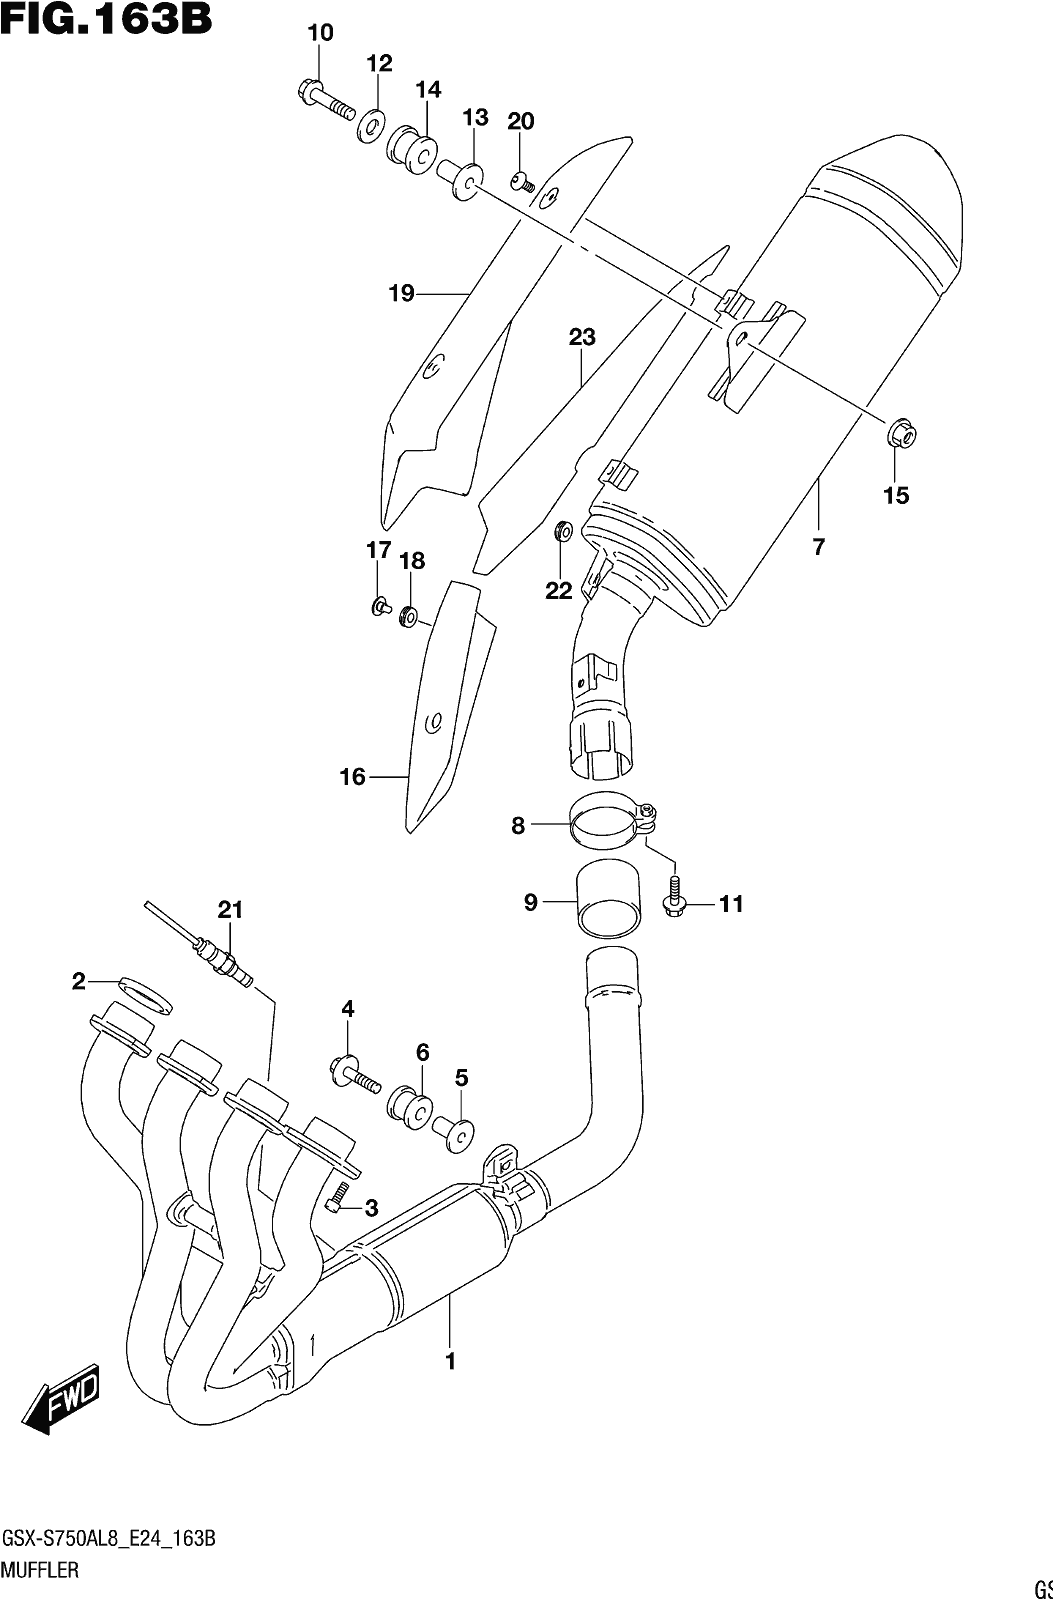 Fig.163b Muffler (gsx-s750zal8 E24)